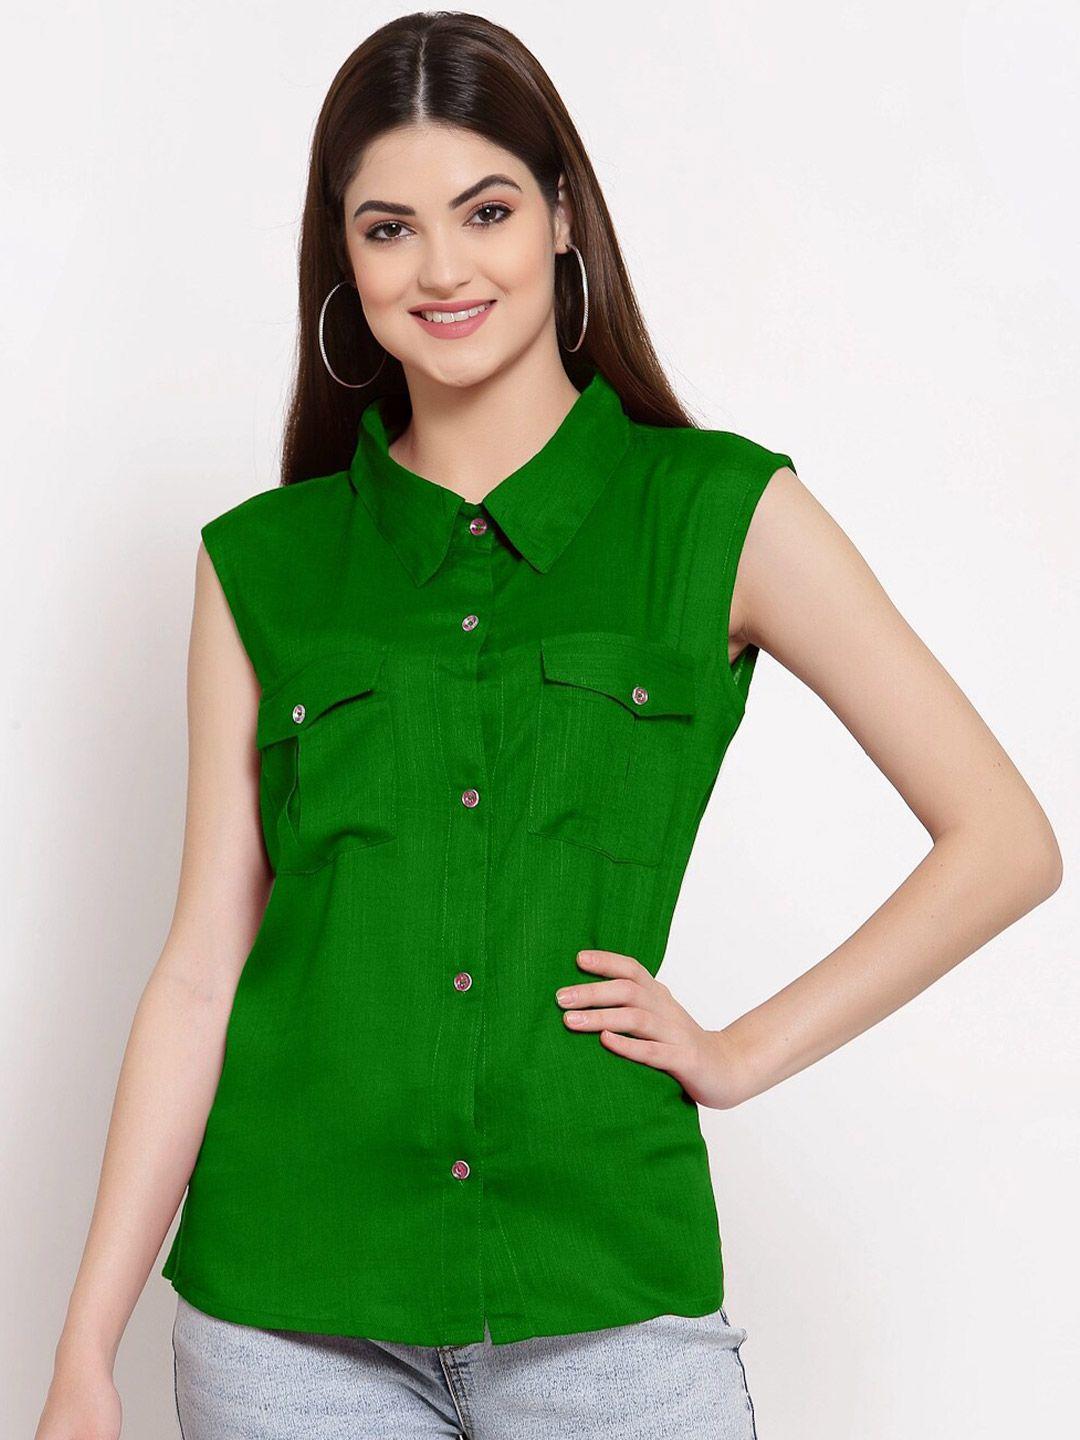 patrorna women green solid comfort casual shirt